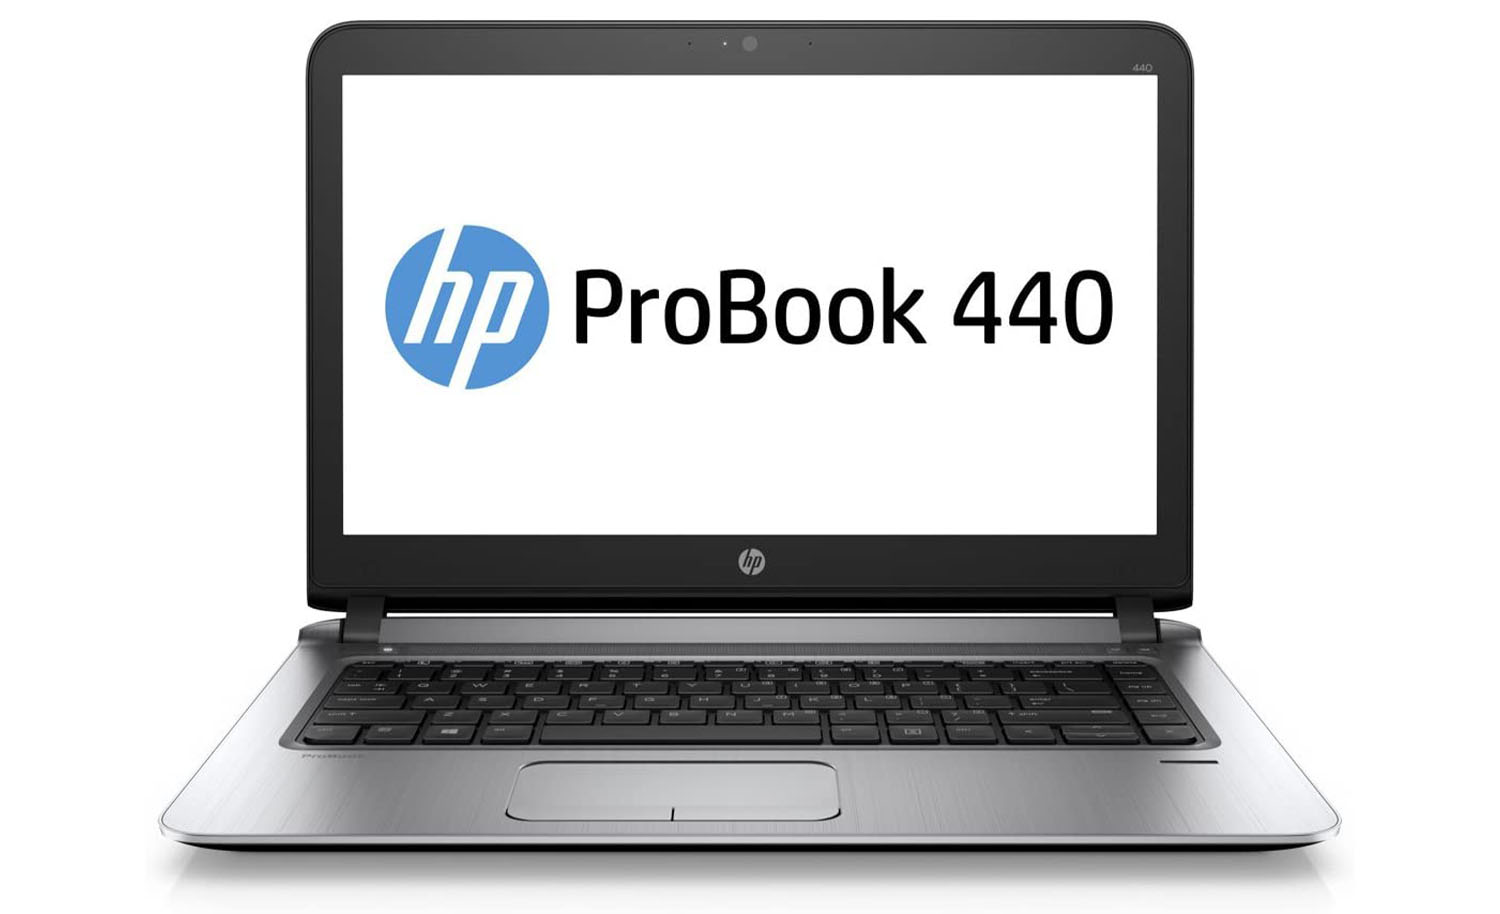 HP Probook 440 G3 Intel Core i5 6th Gen 8GB RAM 500GB HDD Windows 10 Pro